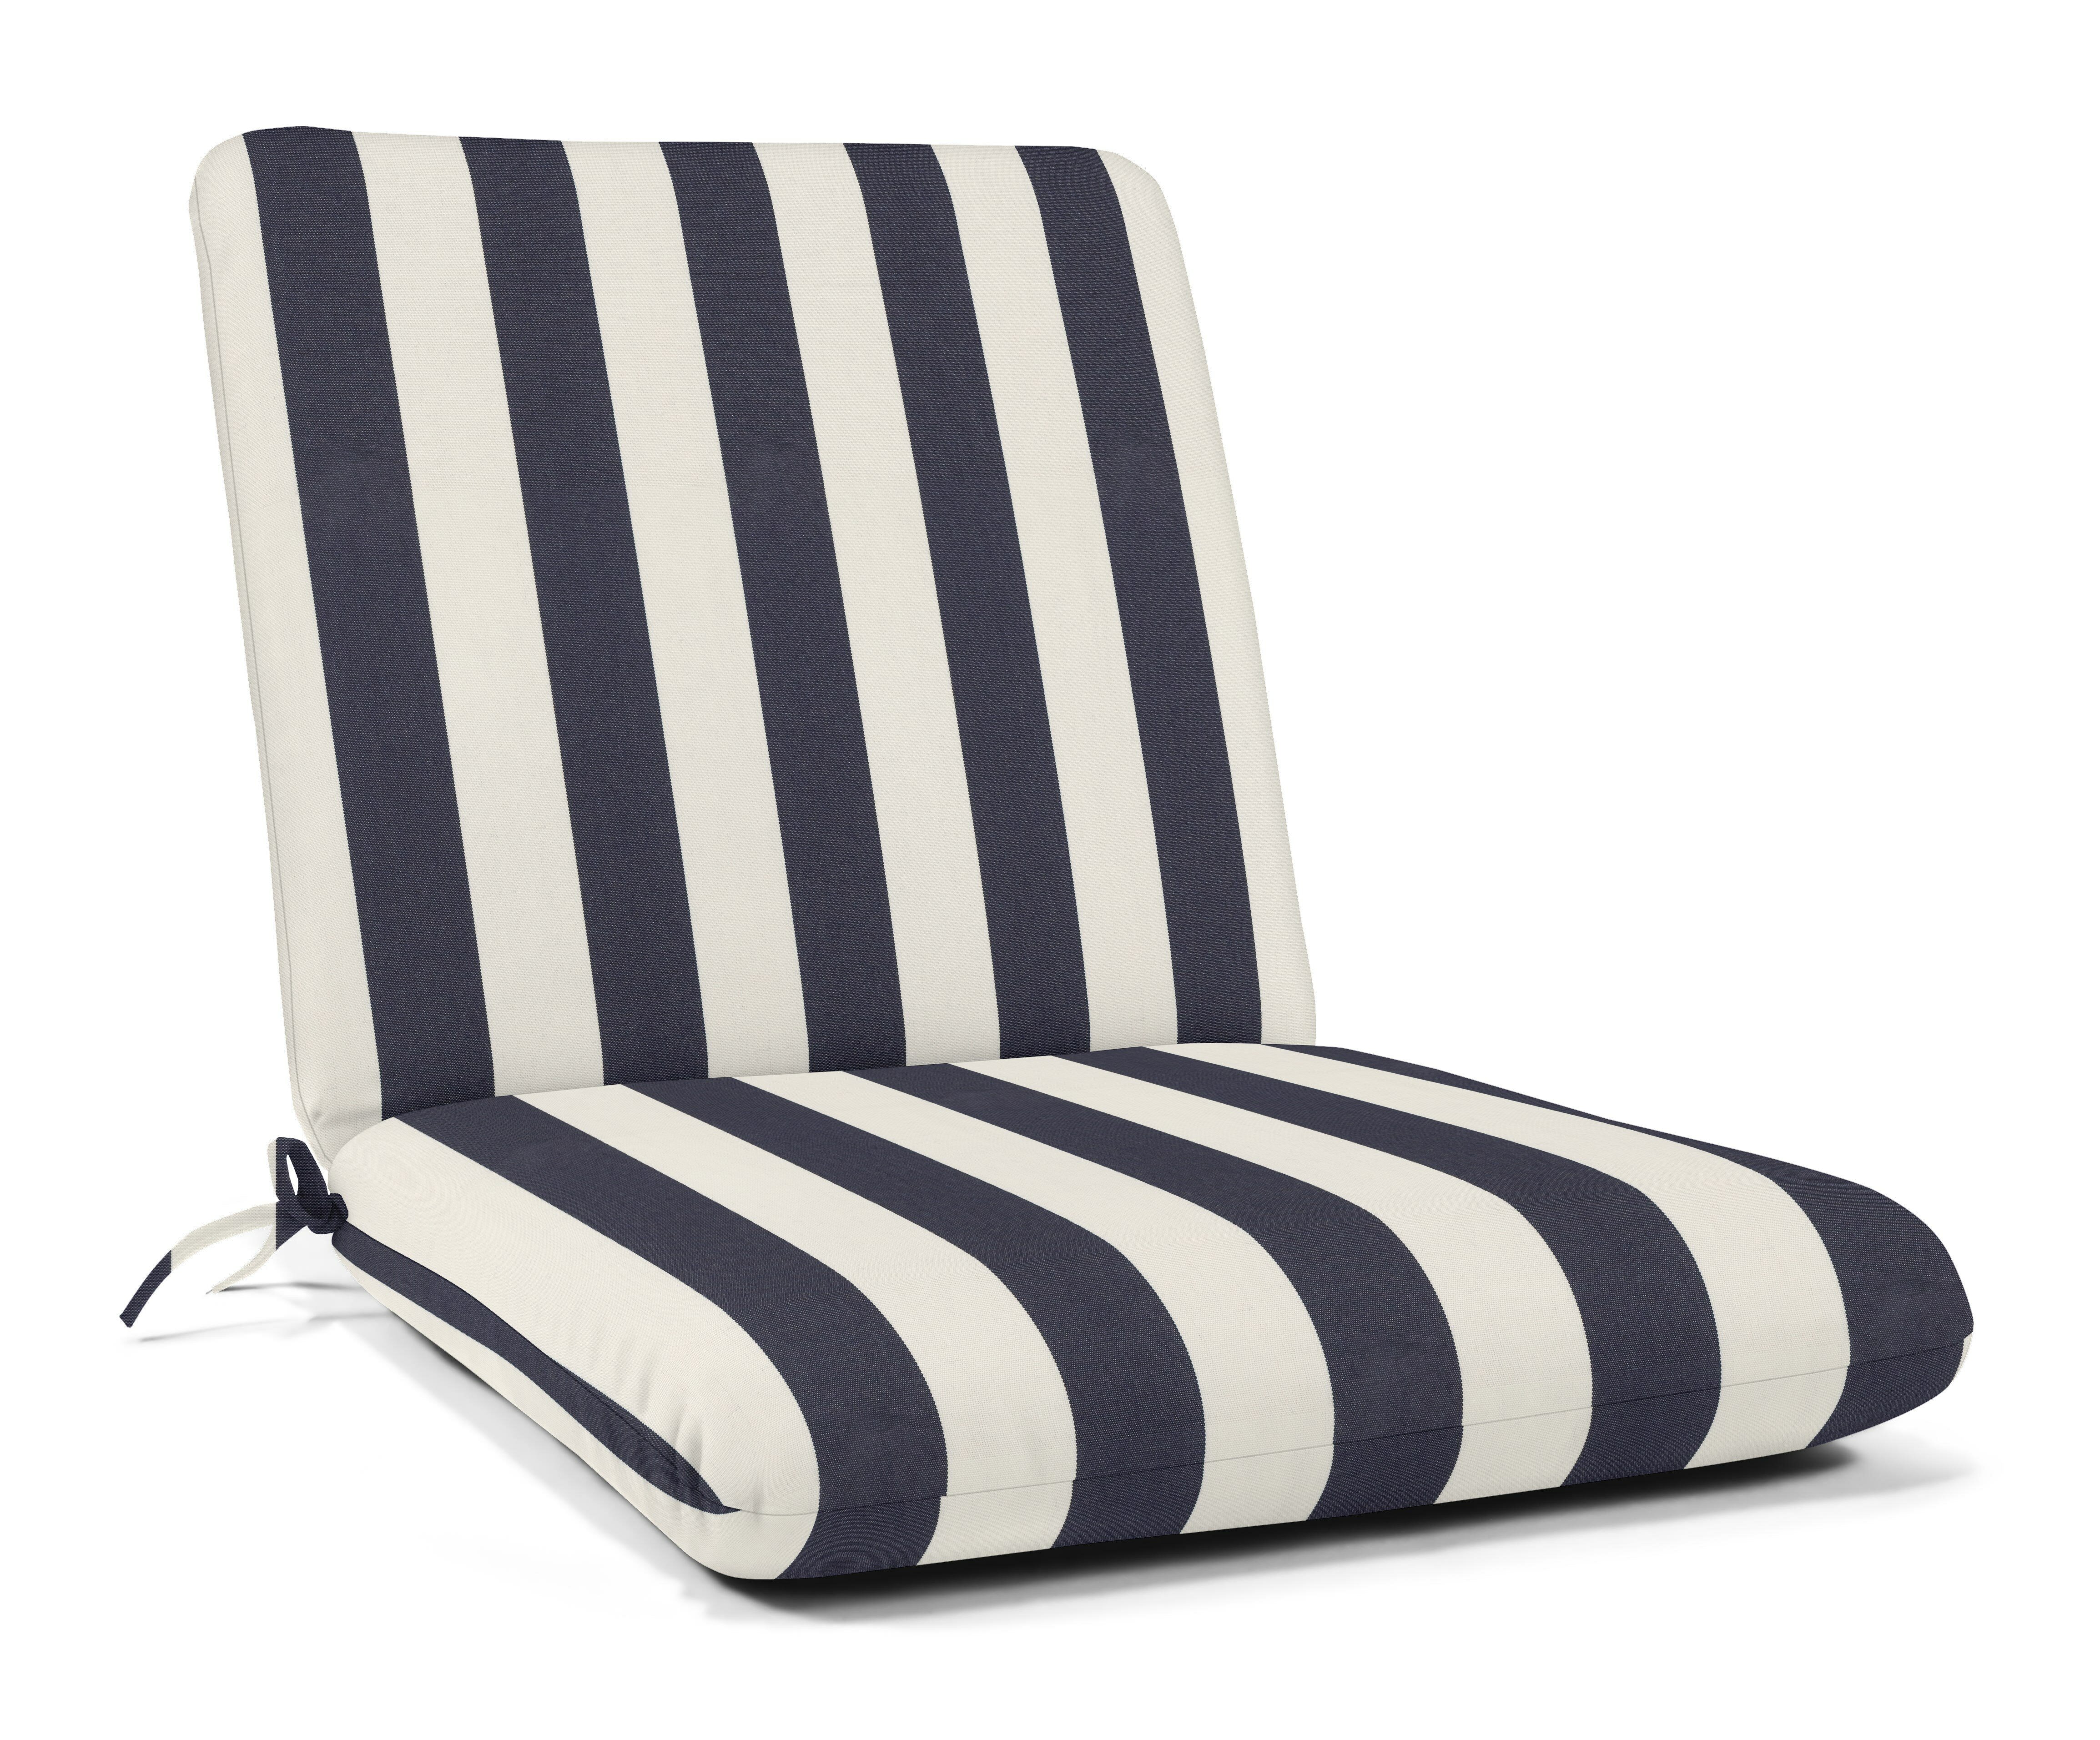 Rohando Stripe Outdoor/Indoor High Back Dining Chair Cushion for Patio Furniture, 21 x 43 x 3, Captain's Blue Latitude Run Fabric: Blue